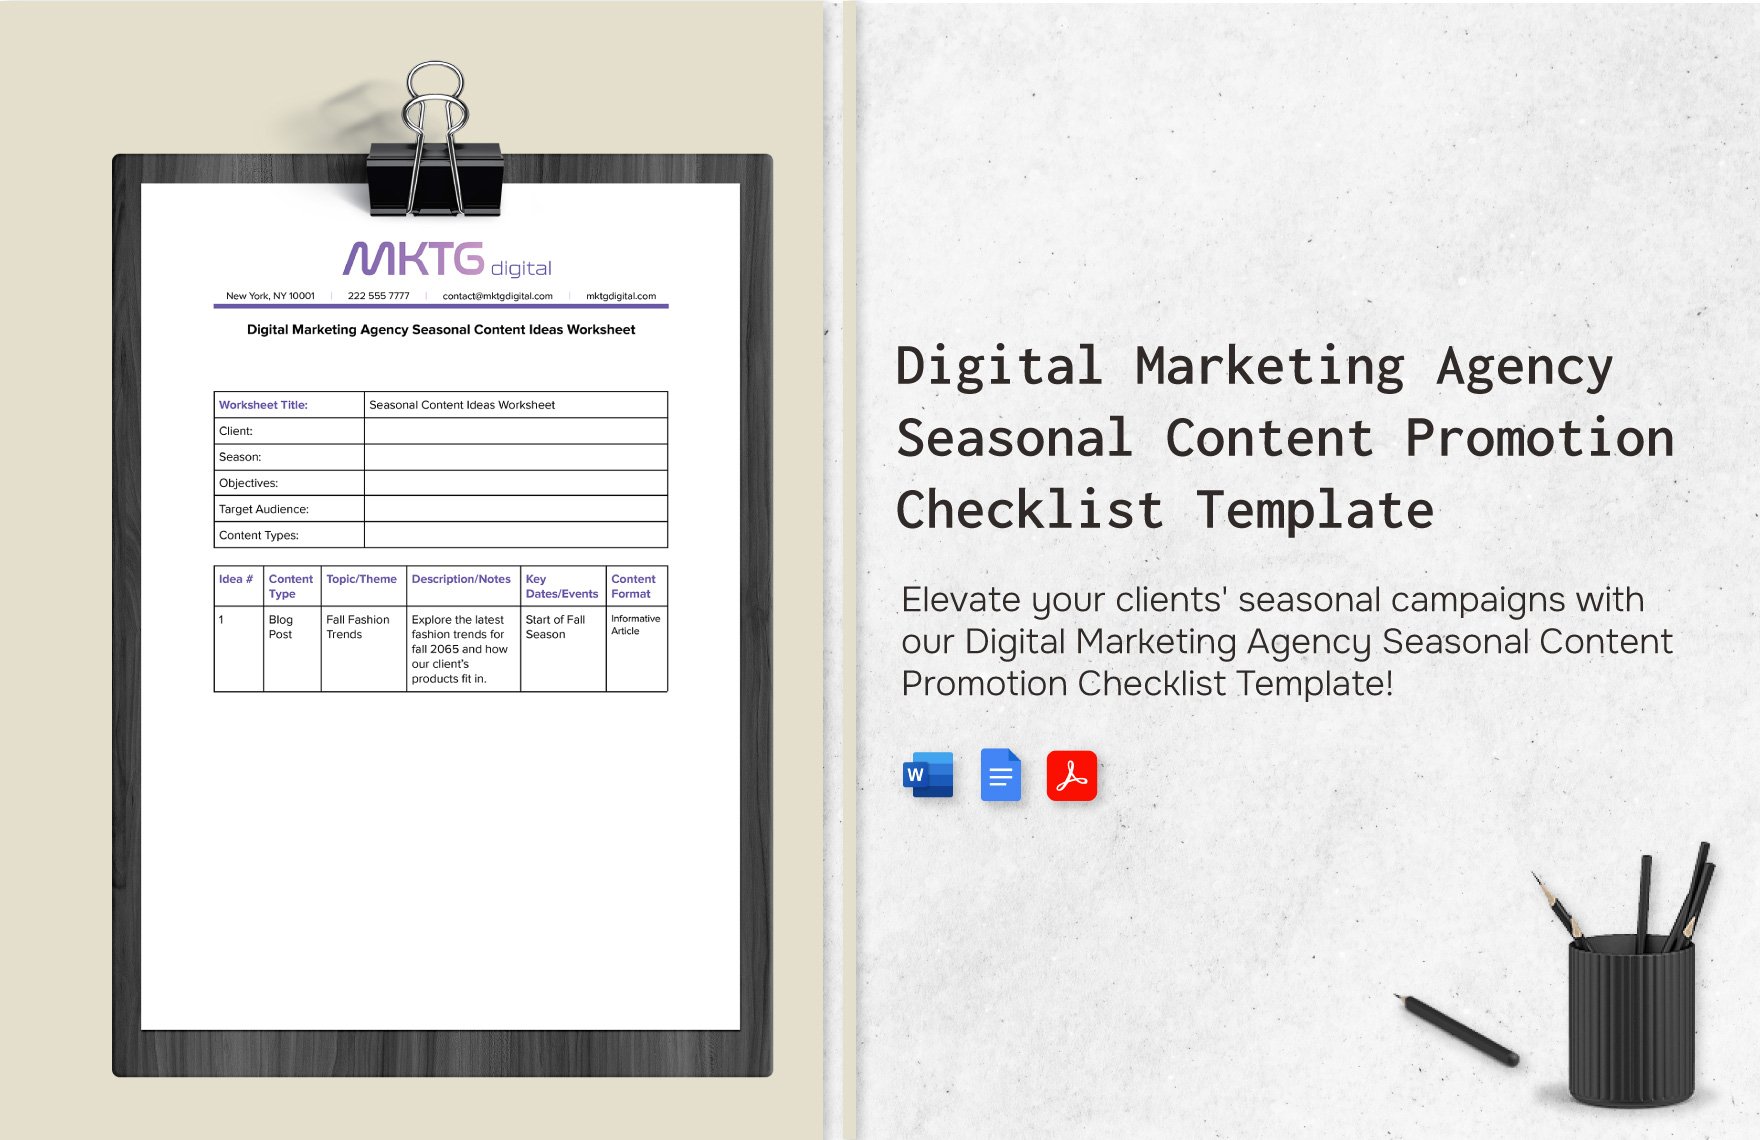 Digital Marketing Agency Seasonal Content Ideas Worksheet Template